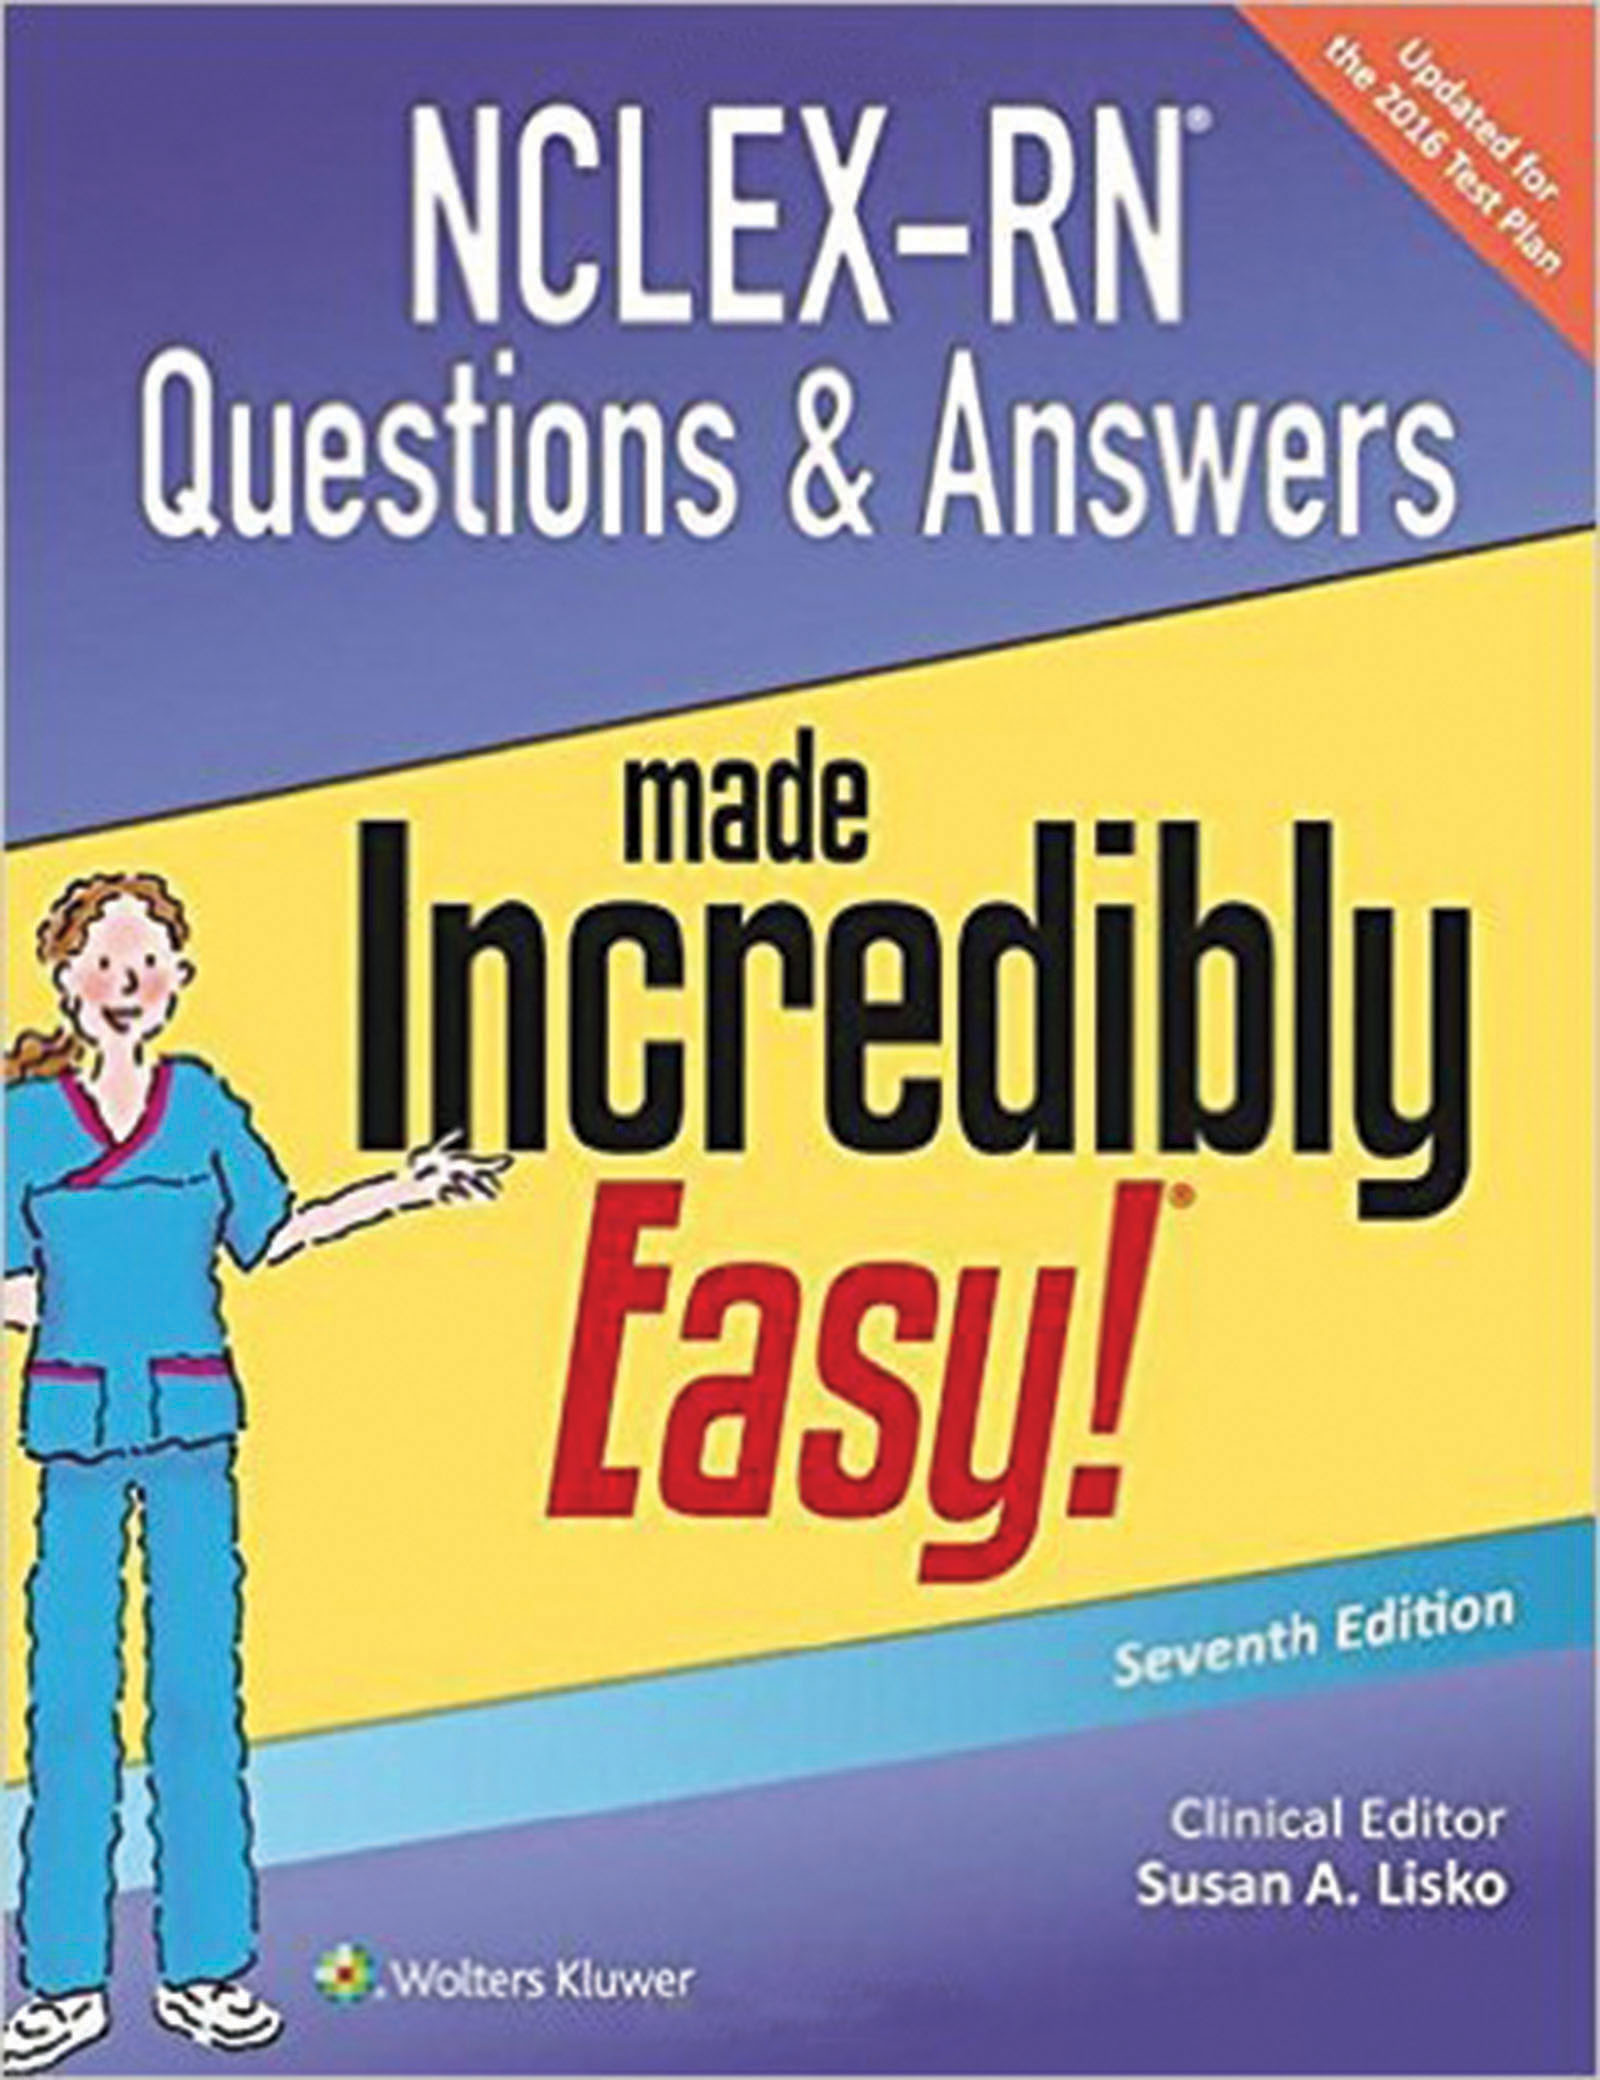 NCLEX-RN Questions & Answers Made Incredibly Easy!, 7th Edition, by Susan A. Lisko, associate professor, Nursing